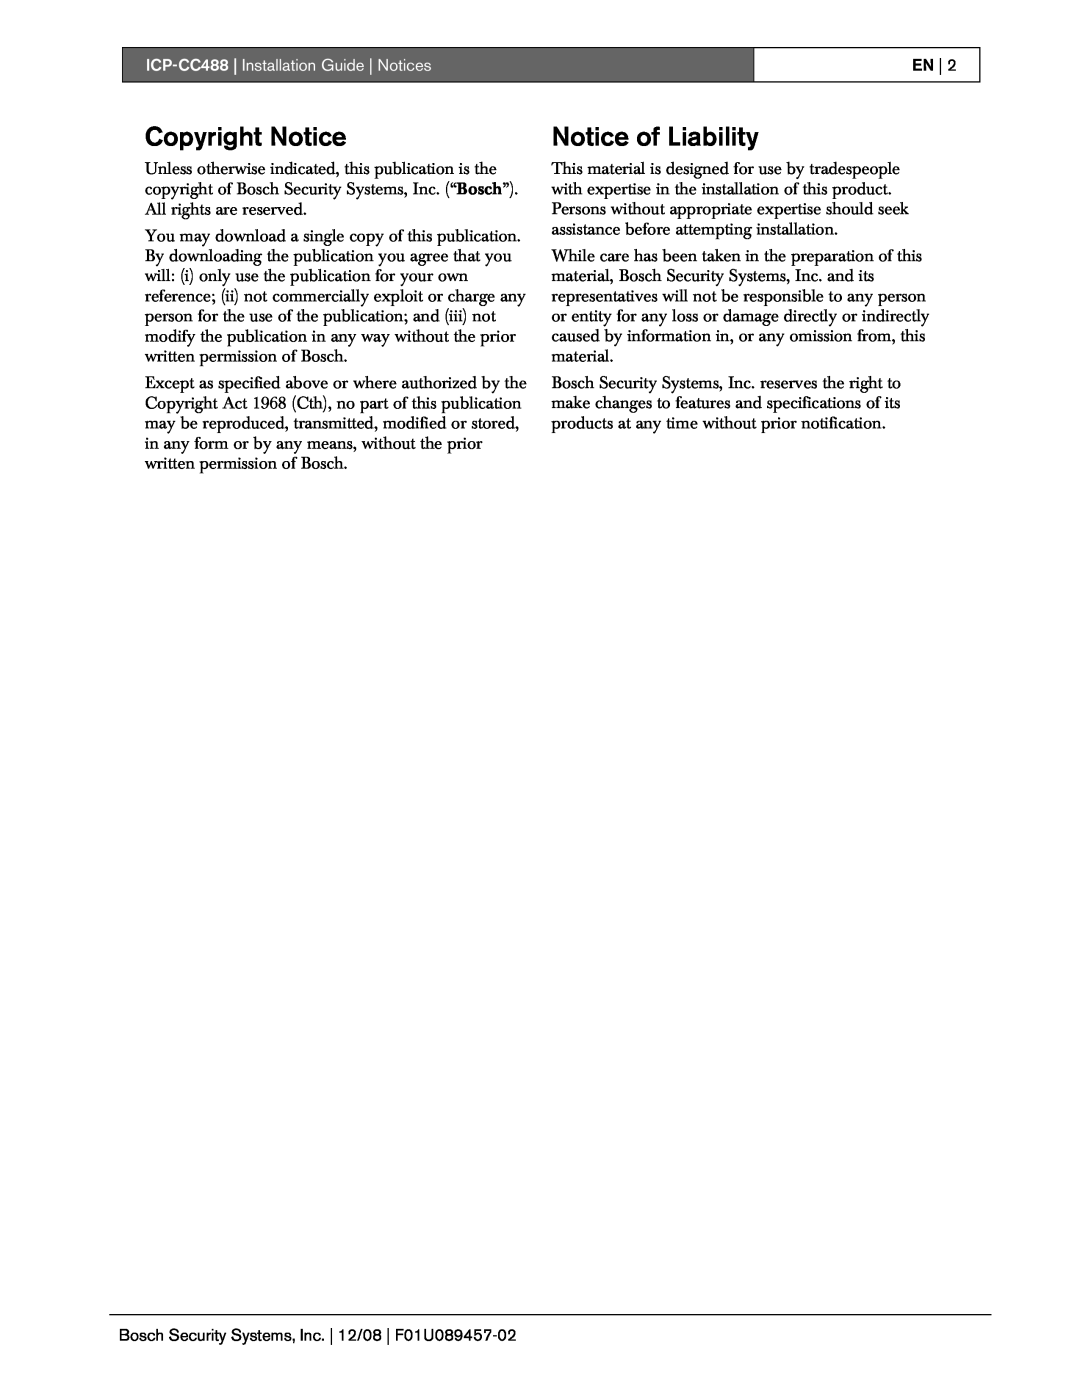 Bosch Appliances manual Copyright Notice, Notice of Liability, ICP-CC488| Installation Guide | Notices, En 